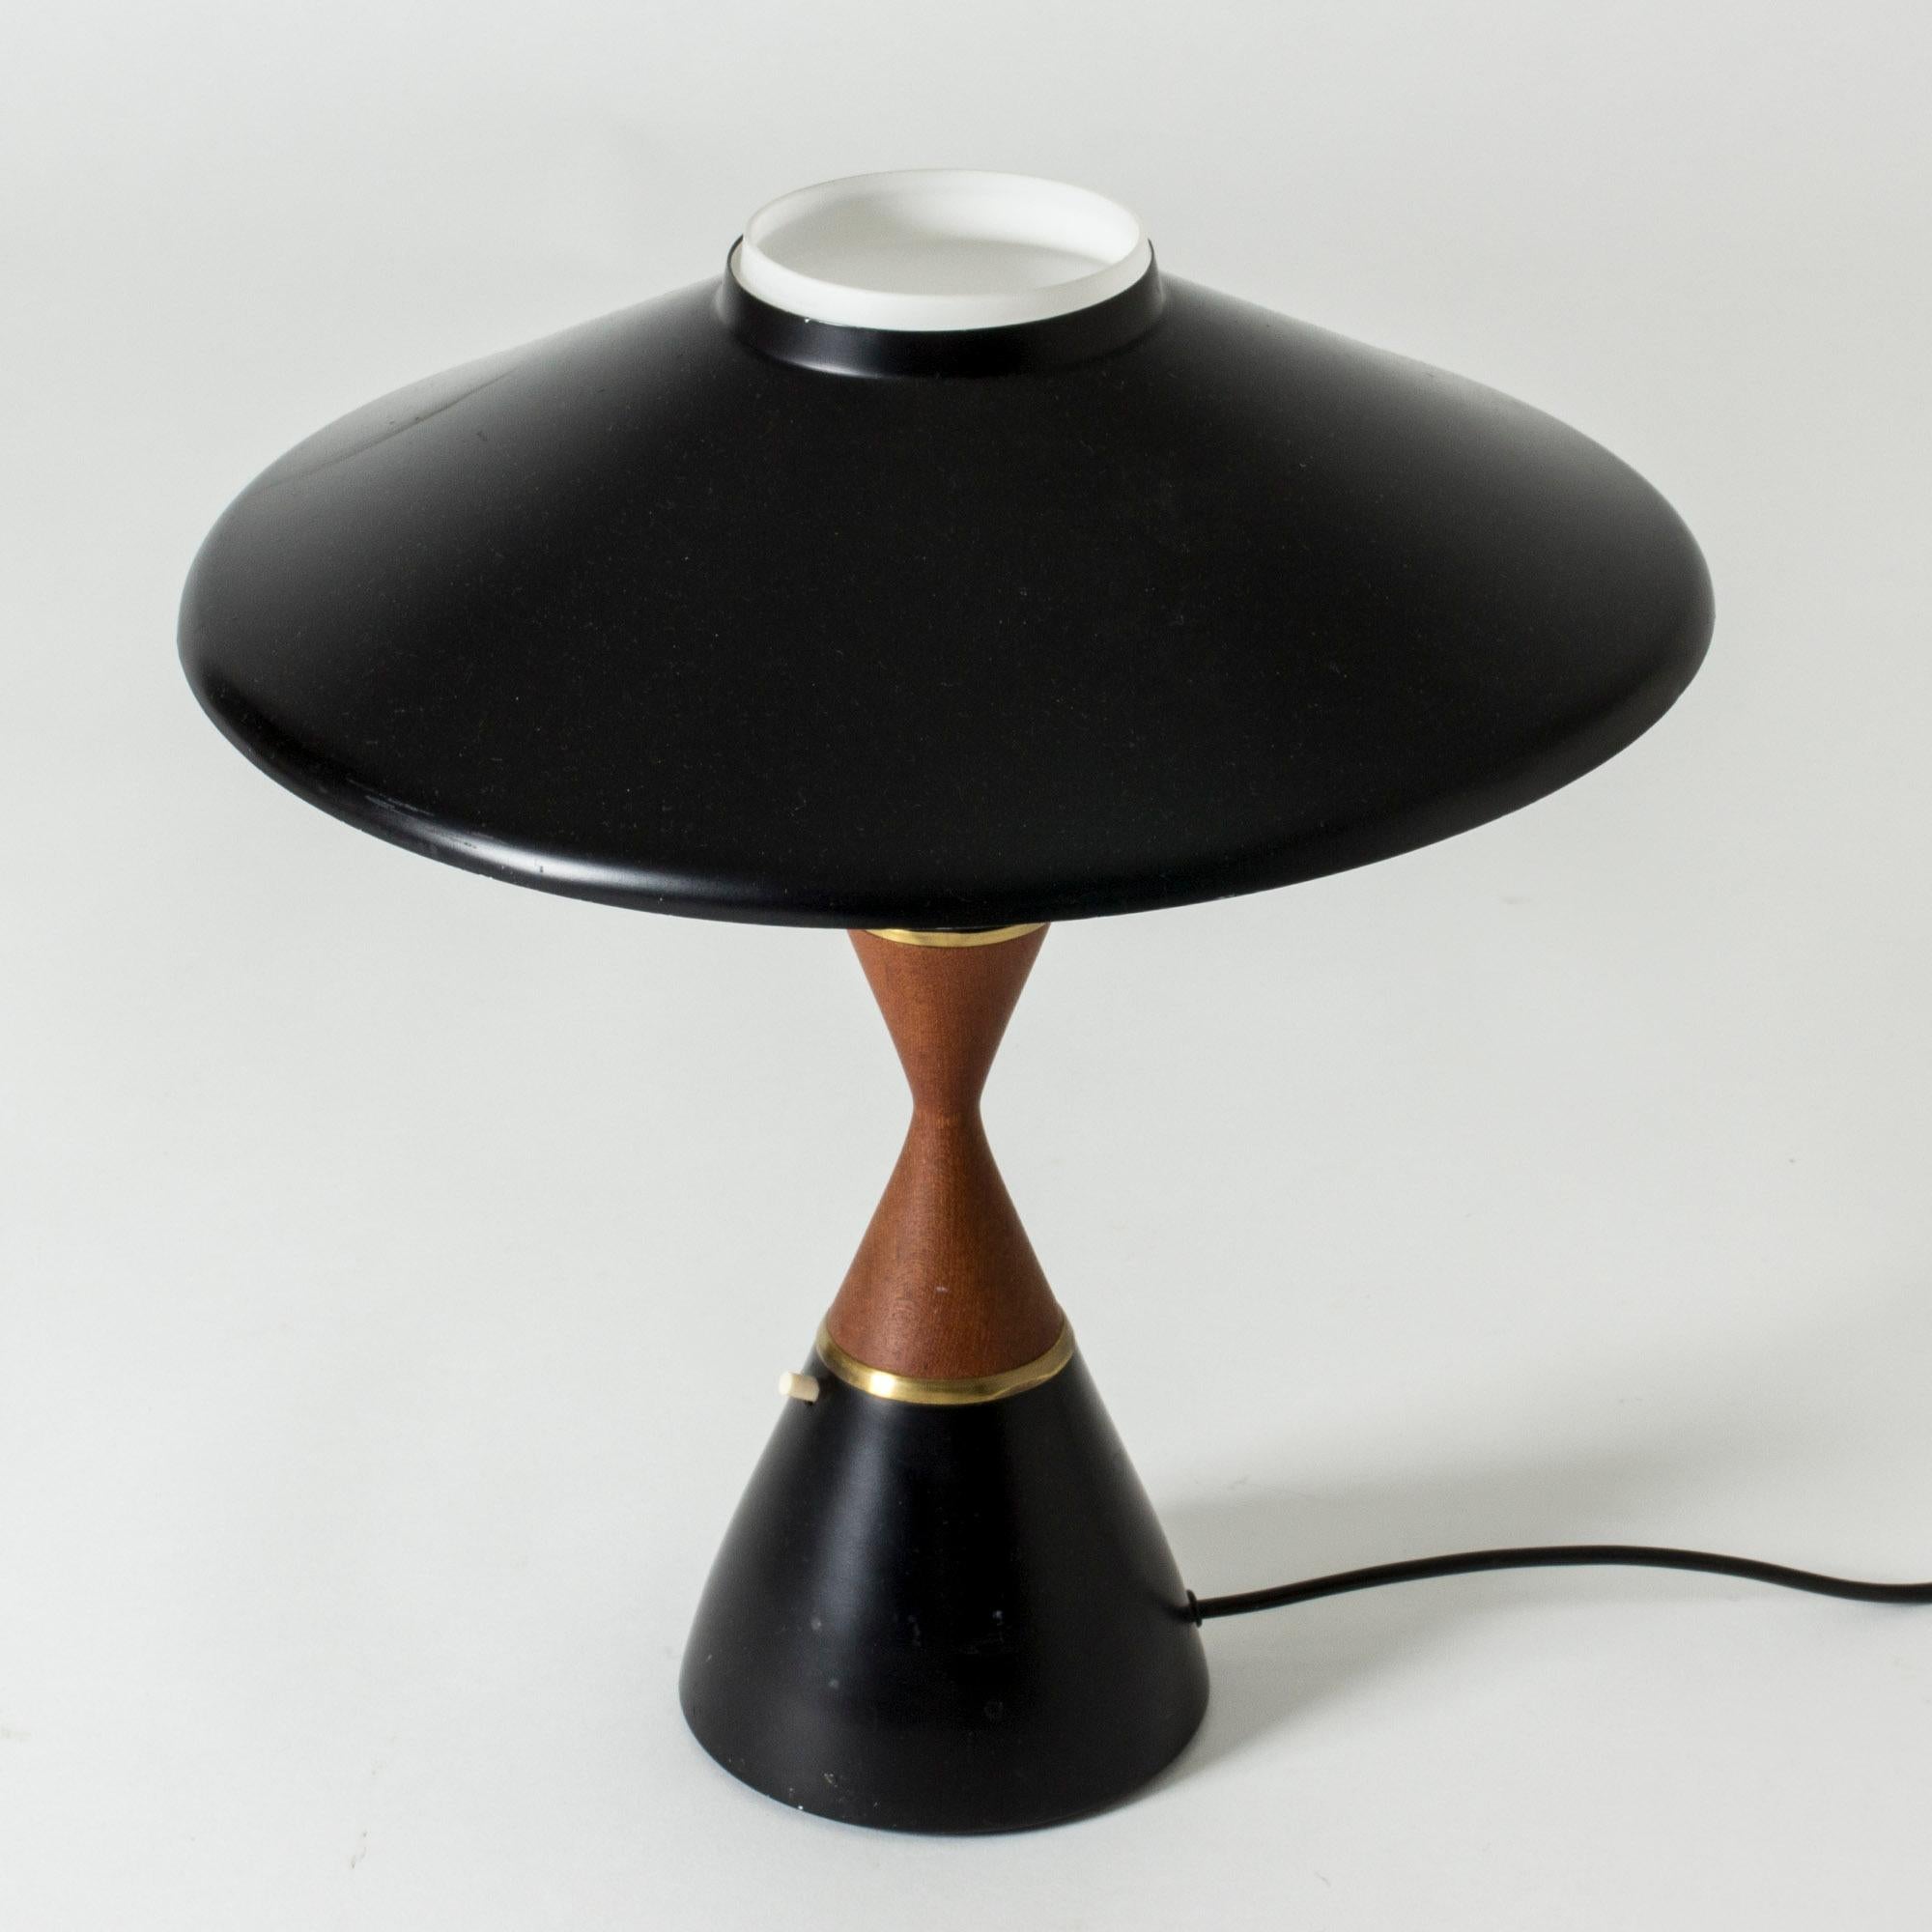 Scandinavian Modern Modernist Table Lamp by Svend Aage Holm Sørensen, Denmark, 1950s For Sale